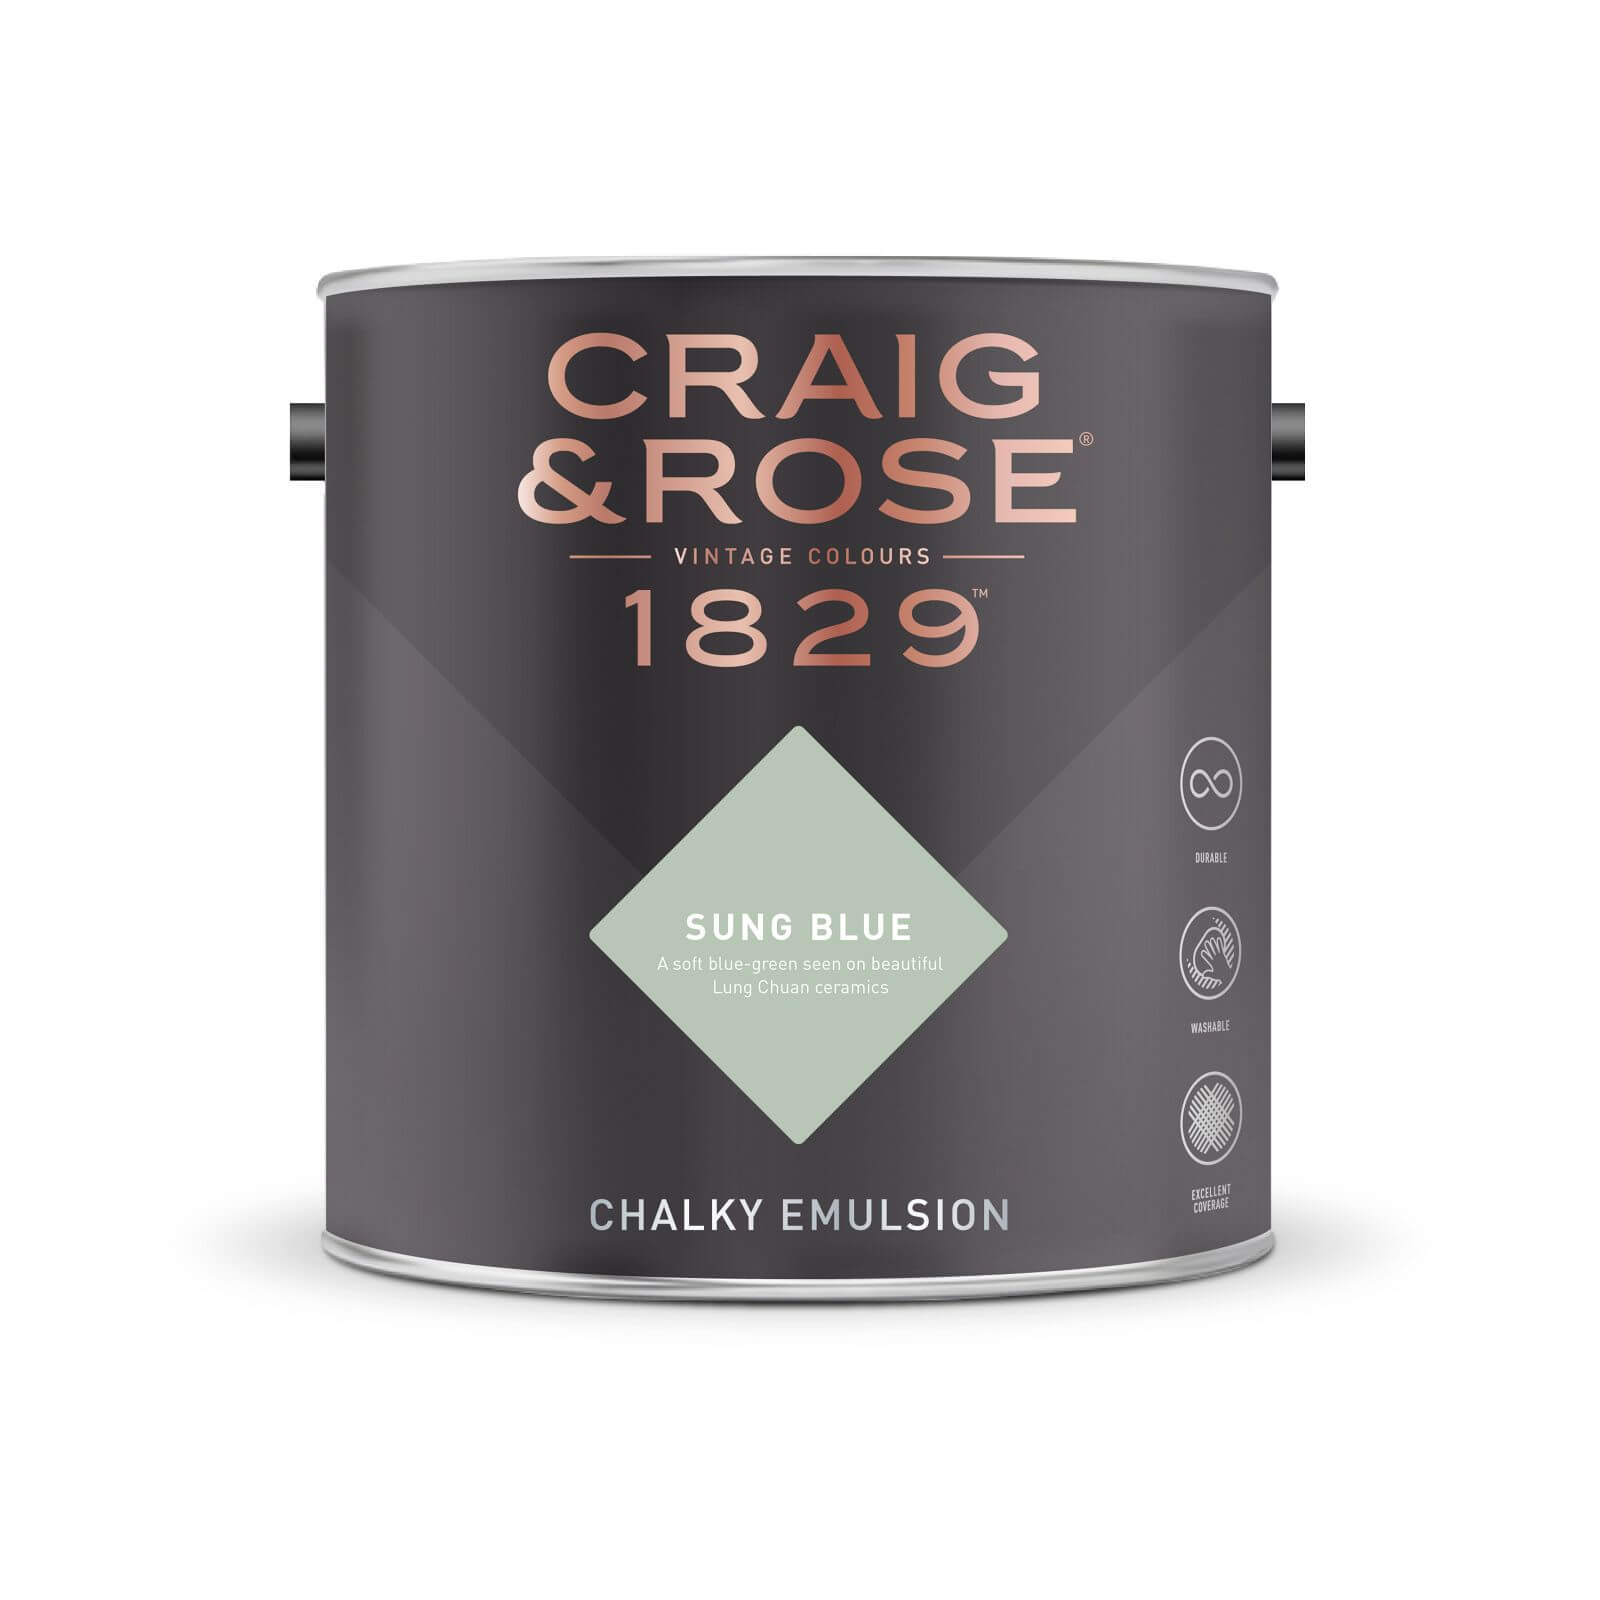 Craig & Rose 1829 Chalky Emulsion Paint Sung Blue - 5L